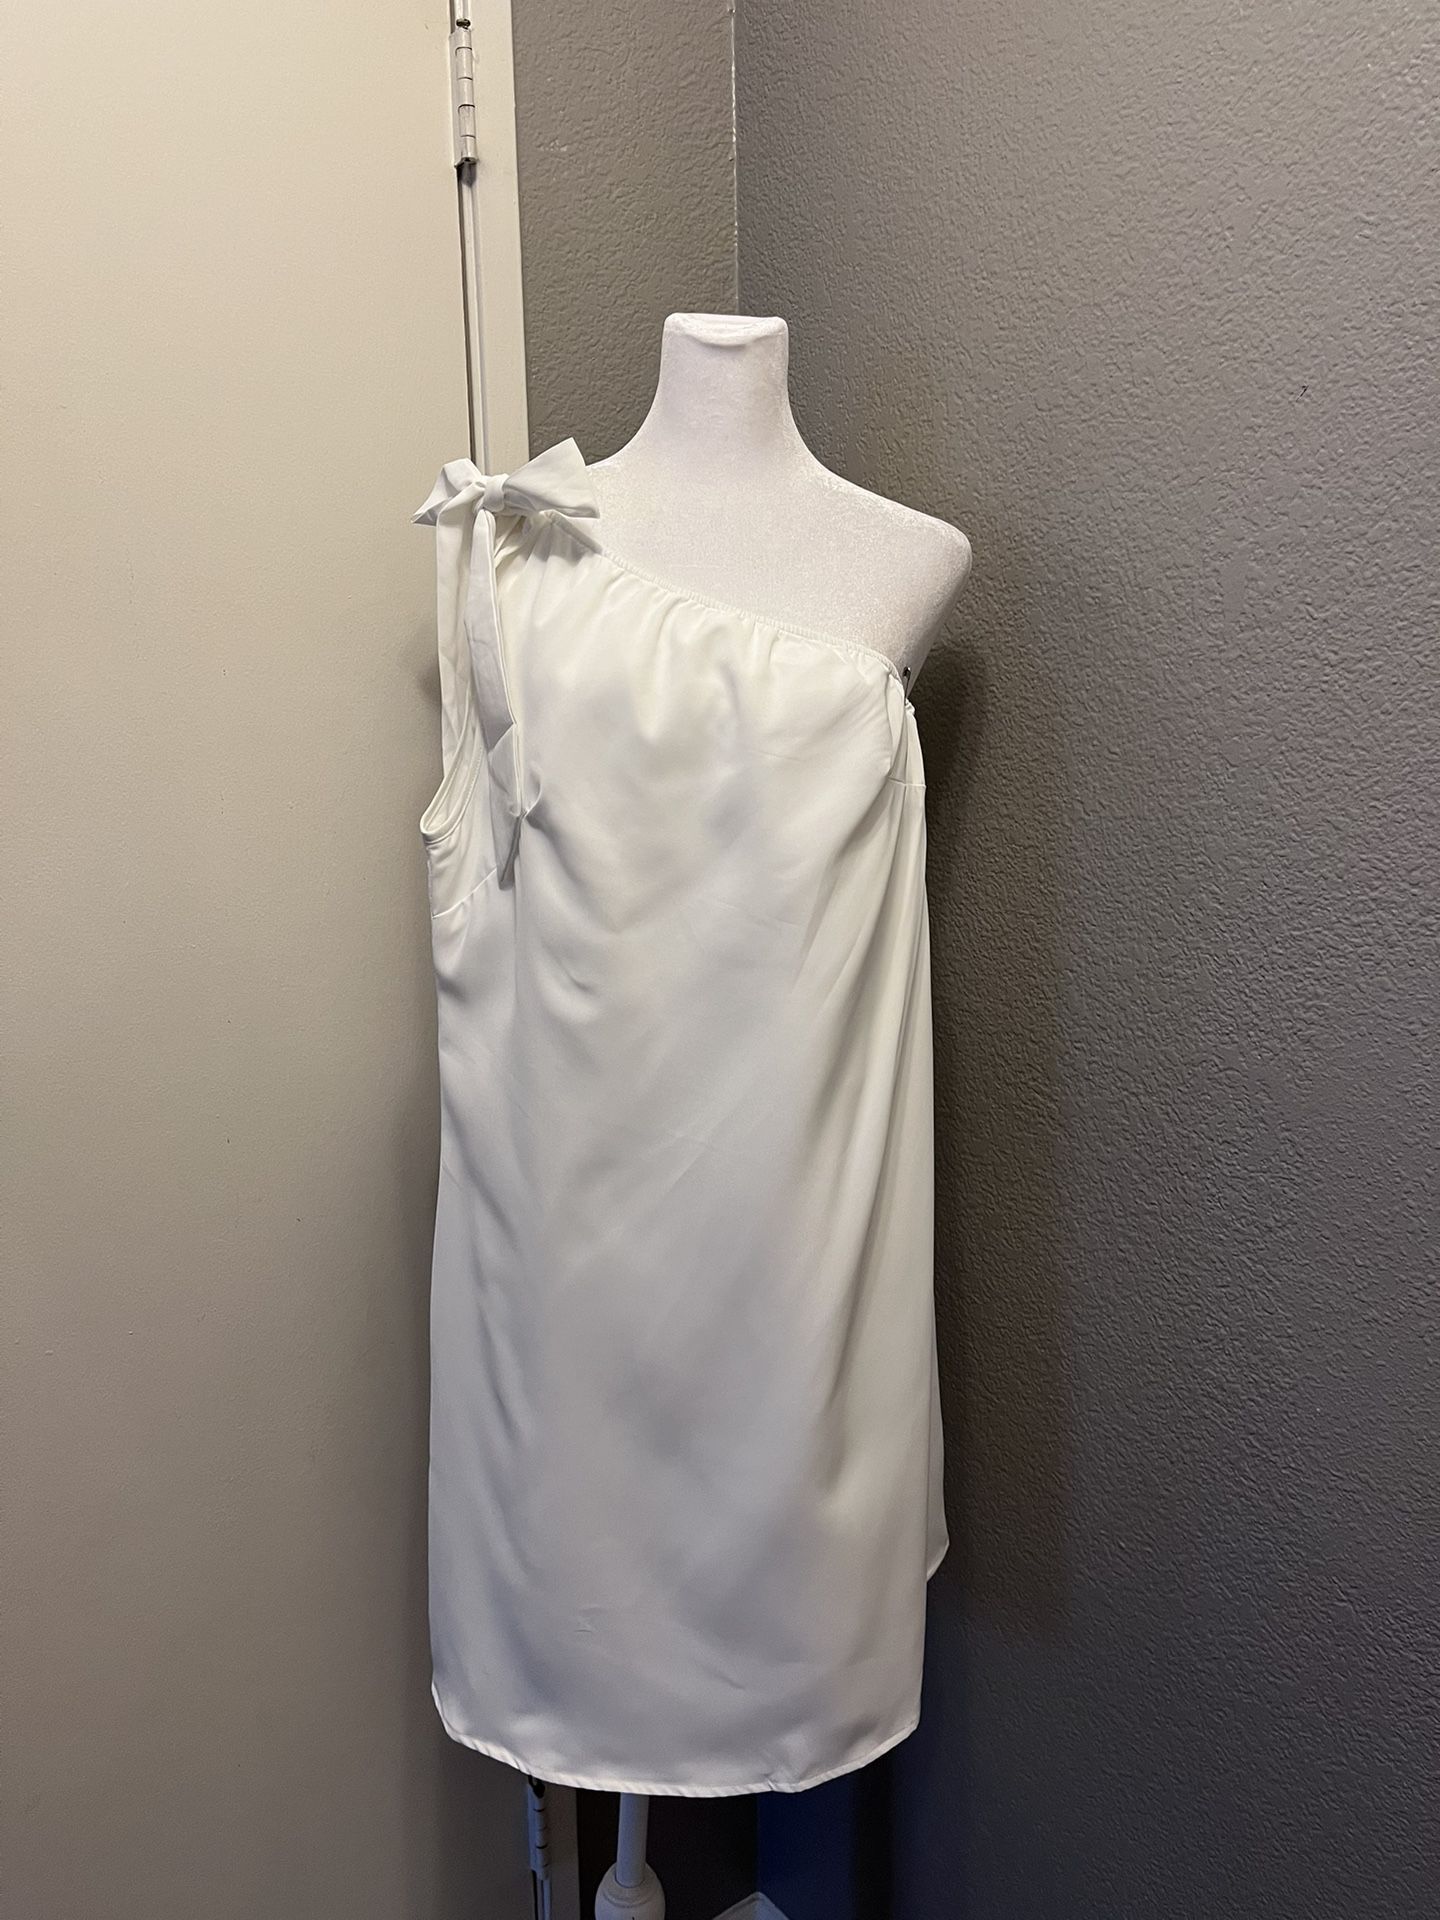 Women’s One Shoulder White Dress Size Medium